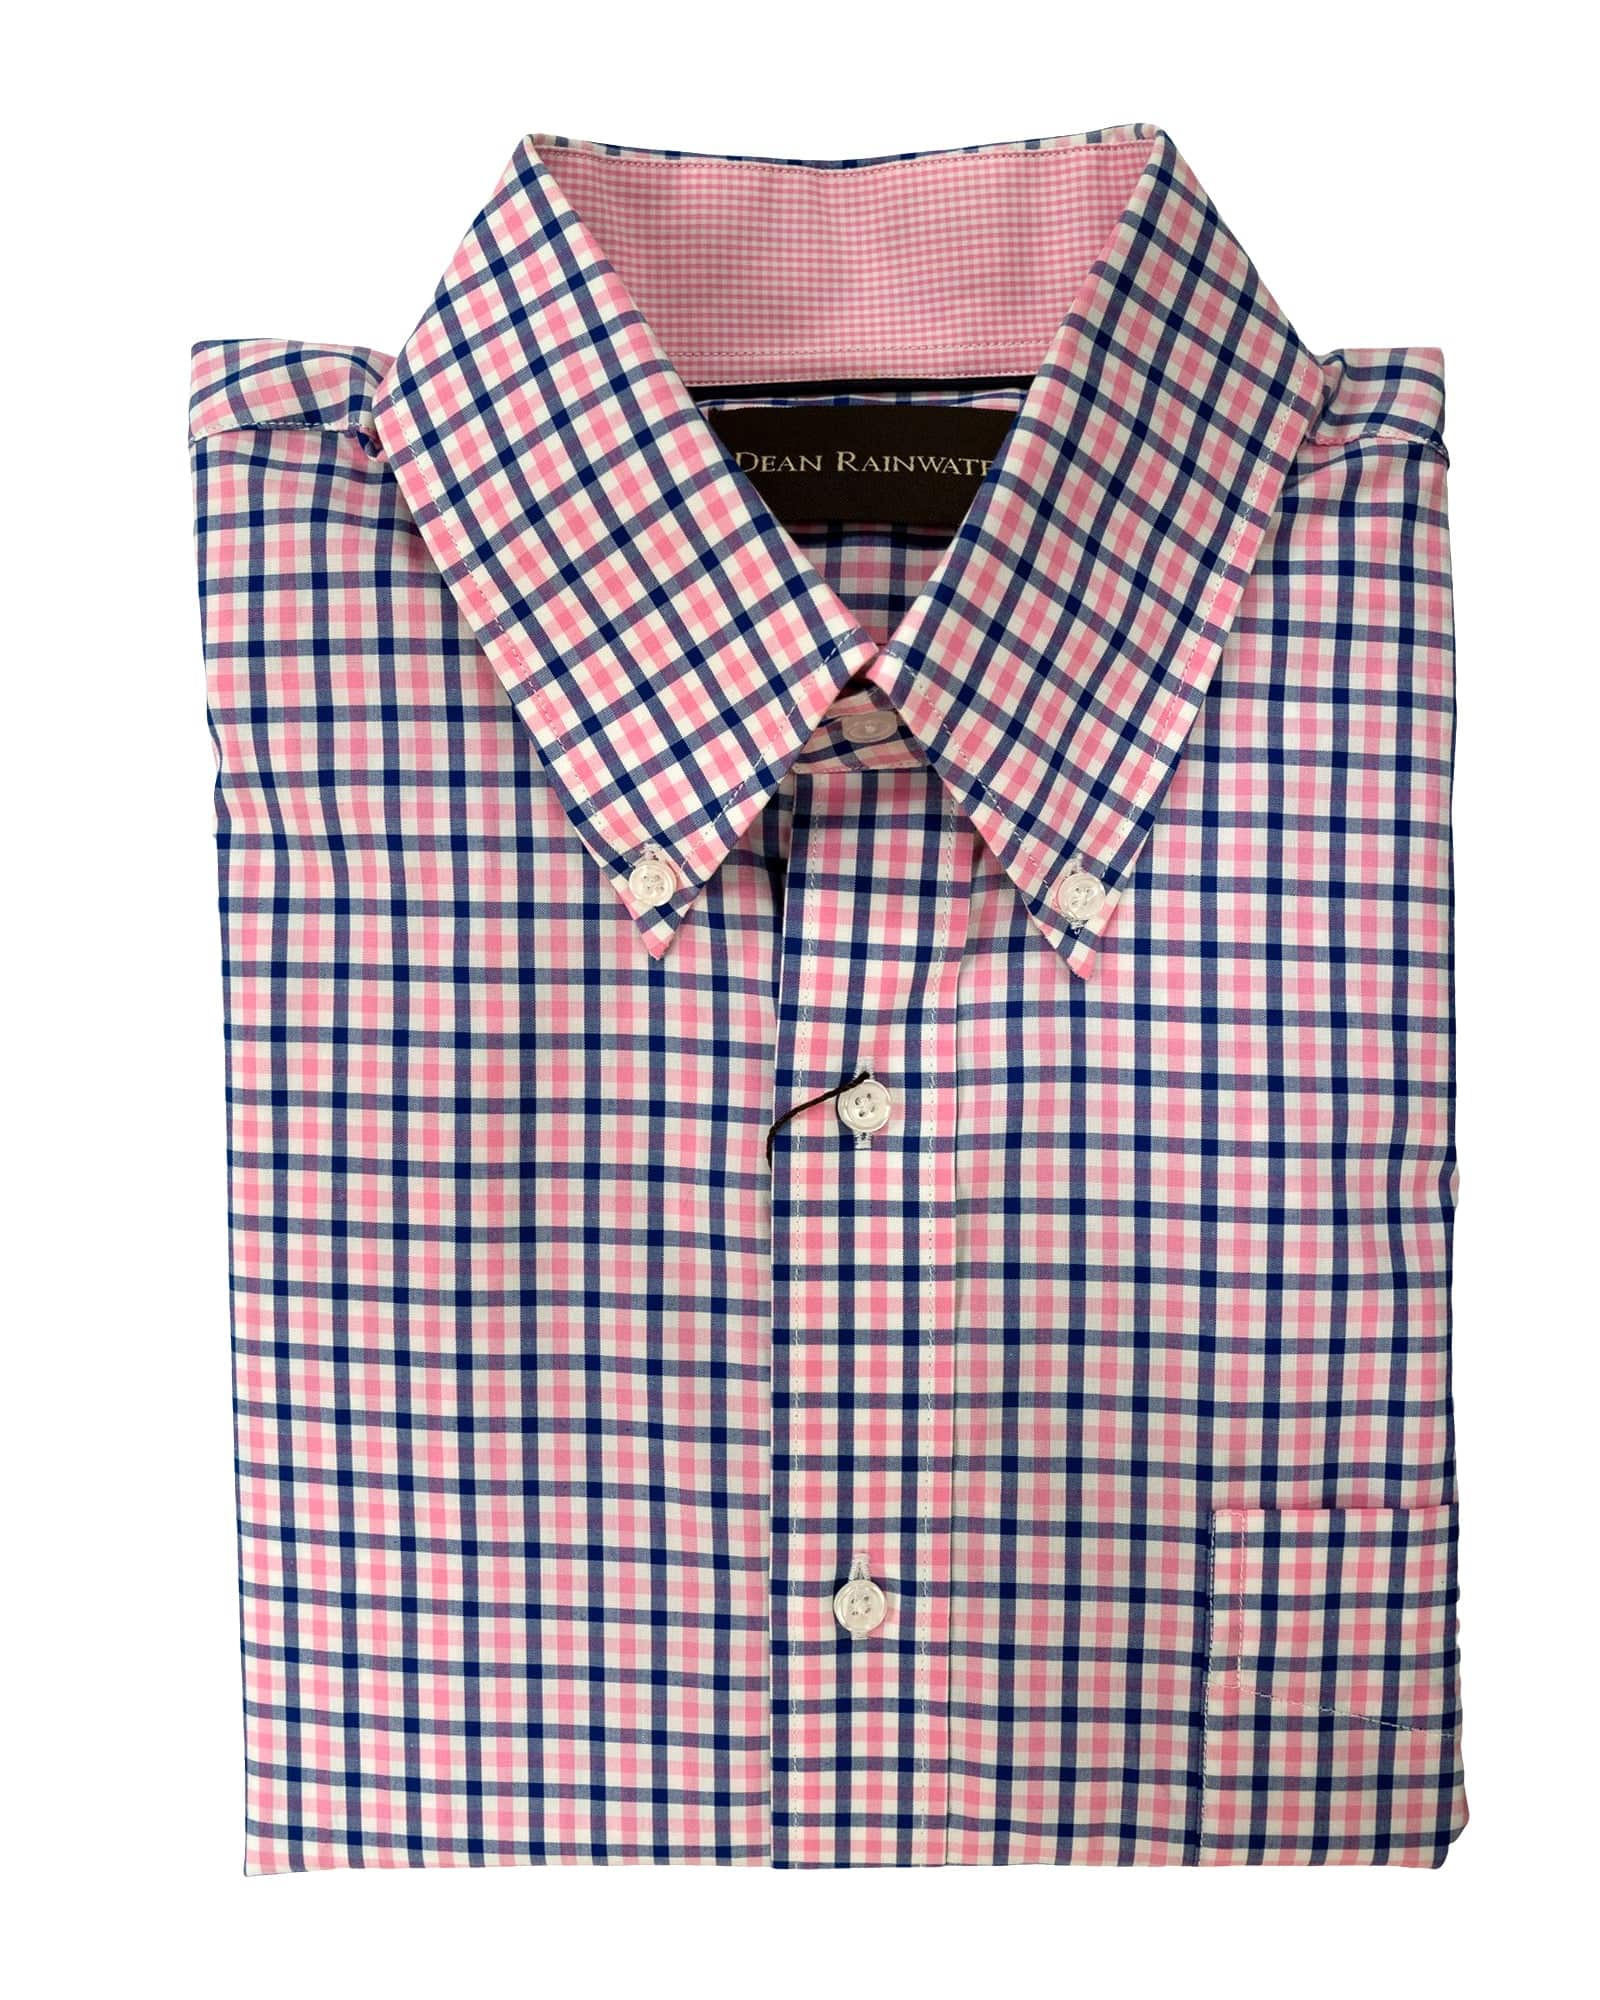 Dean Rainwater's 100% Cotton Pink and Blue Plaid Button Down Sport Shirt - Rainwater's Men's Clothing and Tuxedo Rental